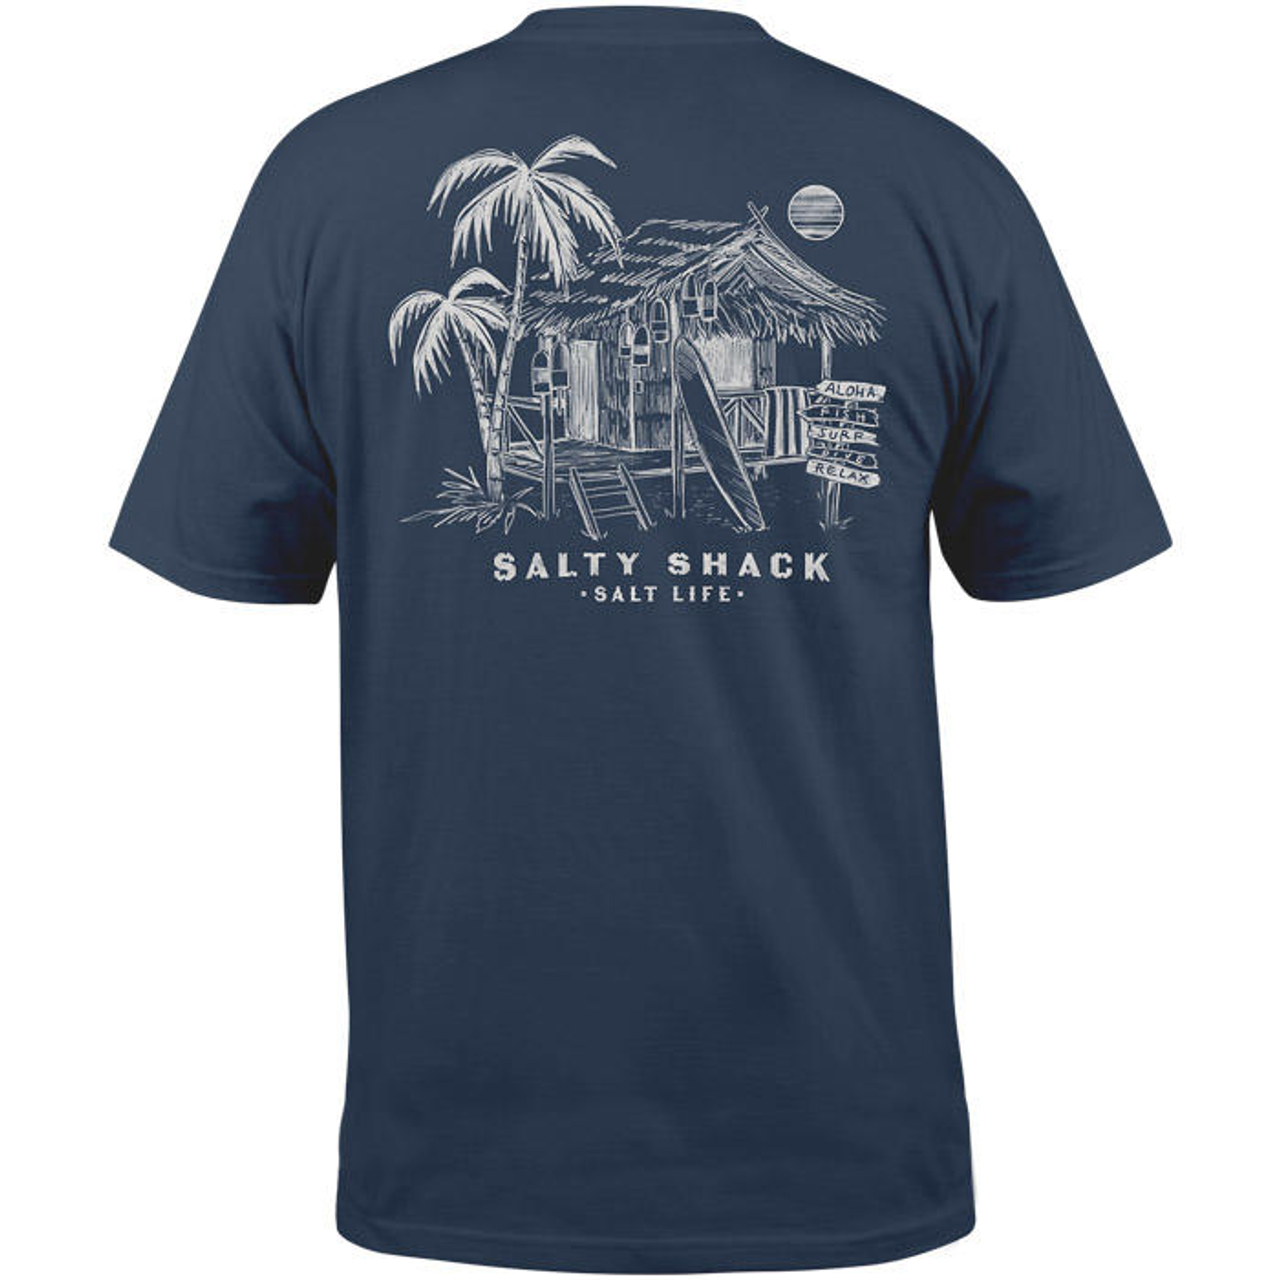 Salt Life - Men's - Salty Shack Short Sleeve T-Shirt